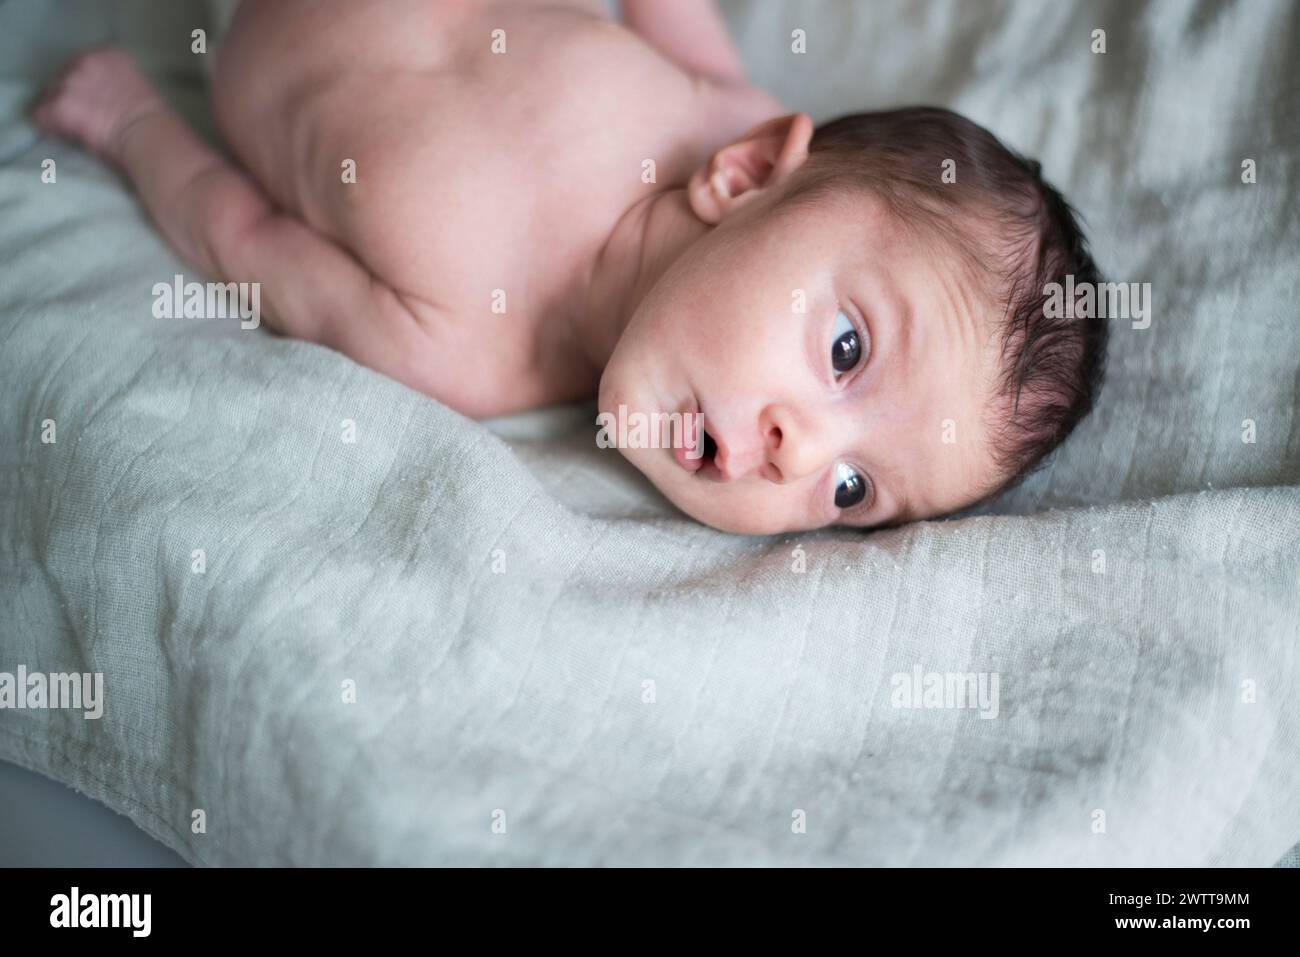 Innocent gaze of a newborn lying on soft linen Stock Photo